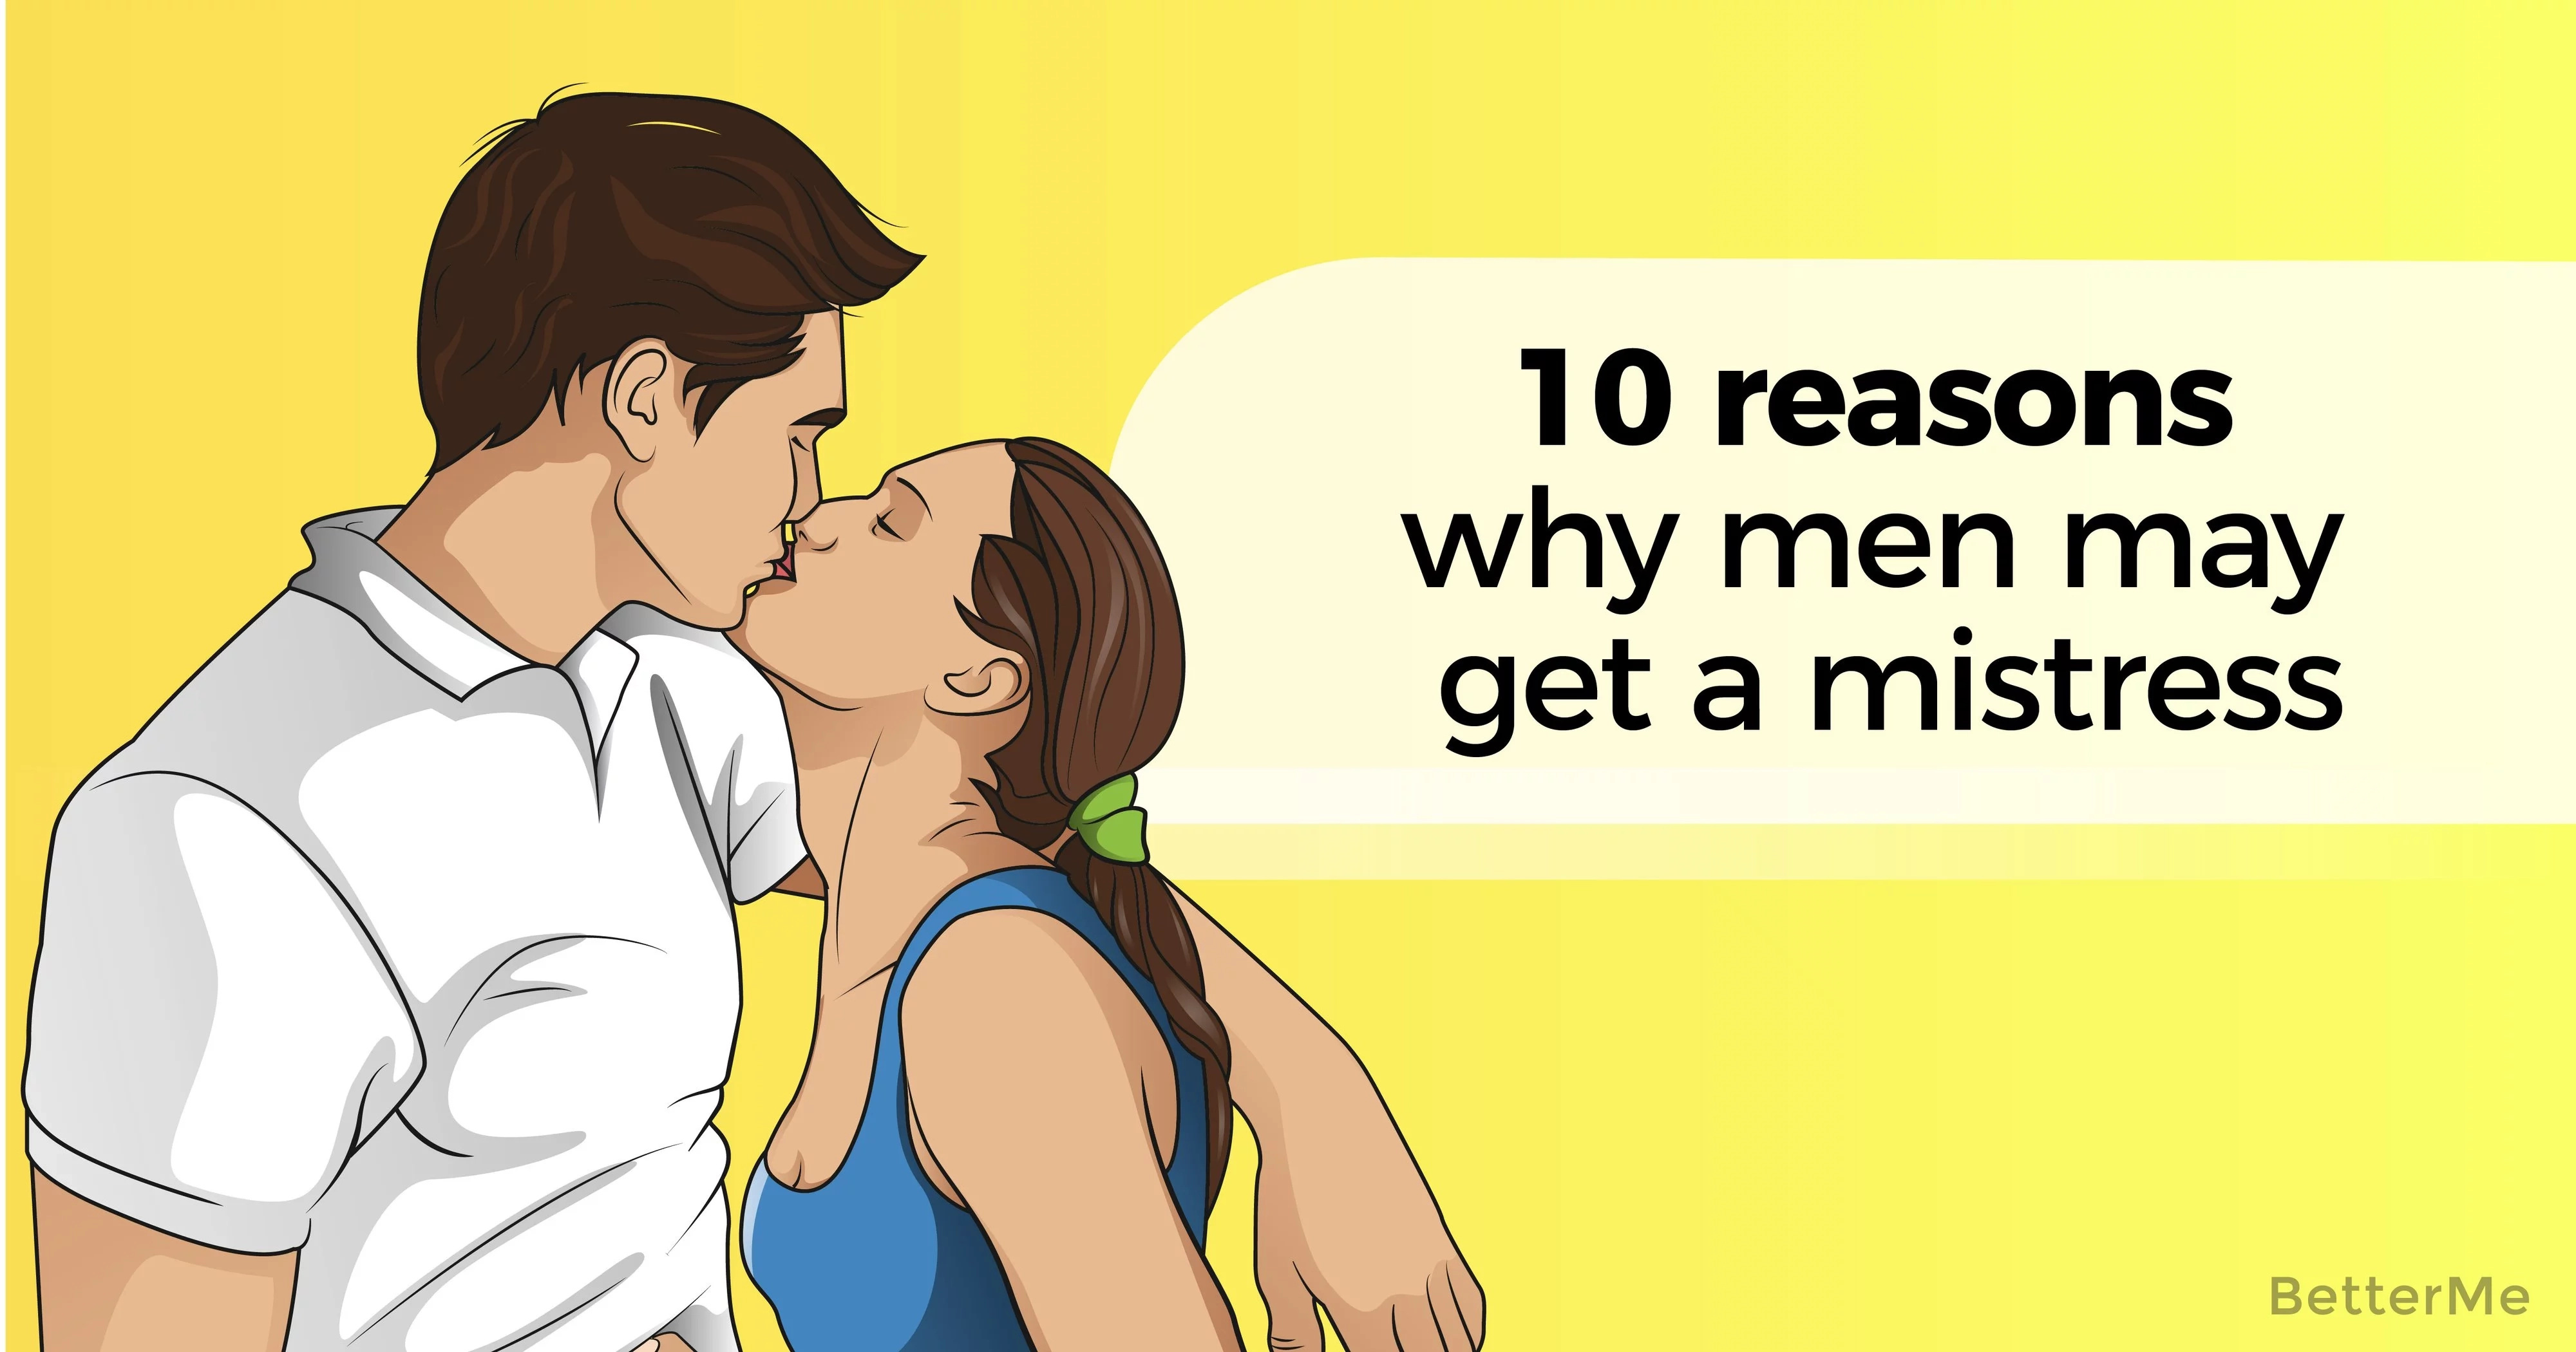 10 reasons why men may get a mistress